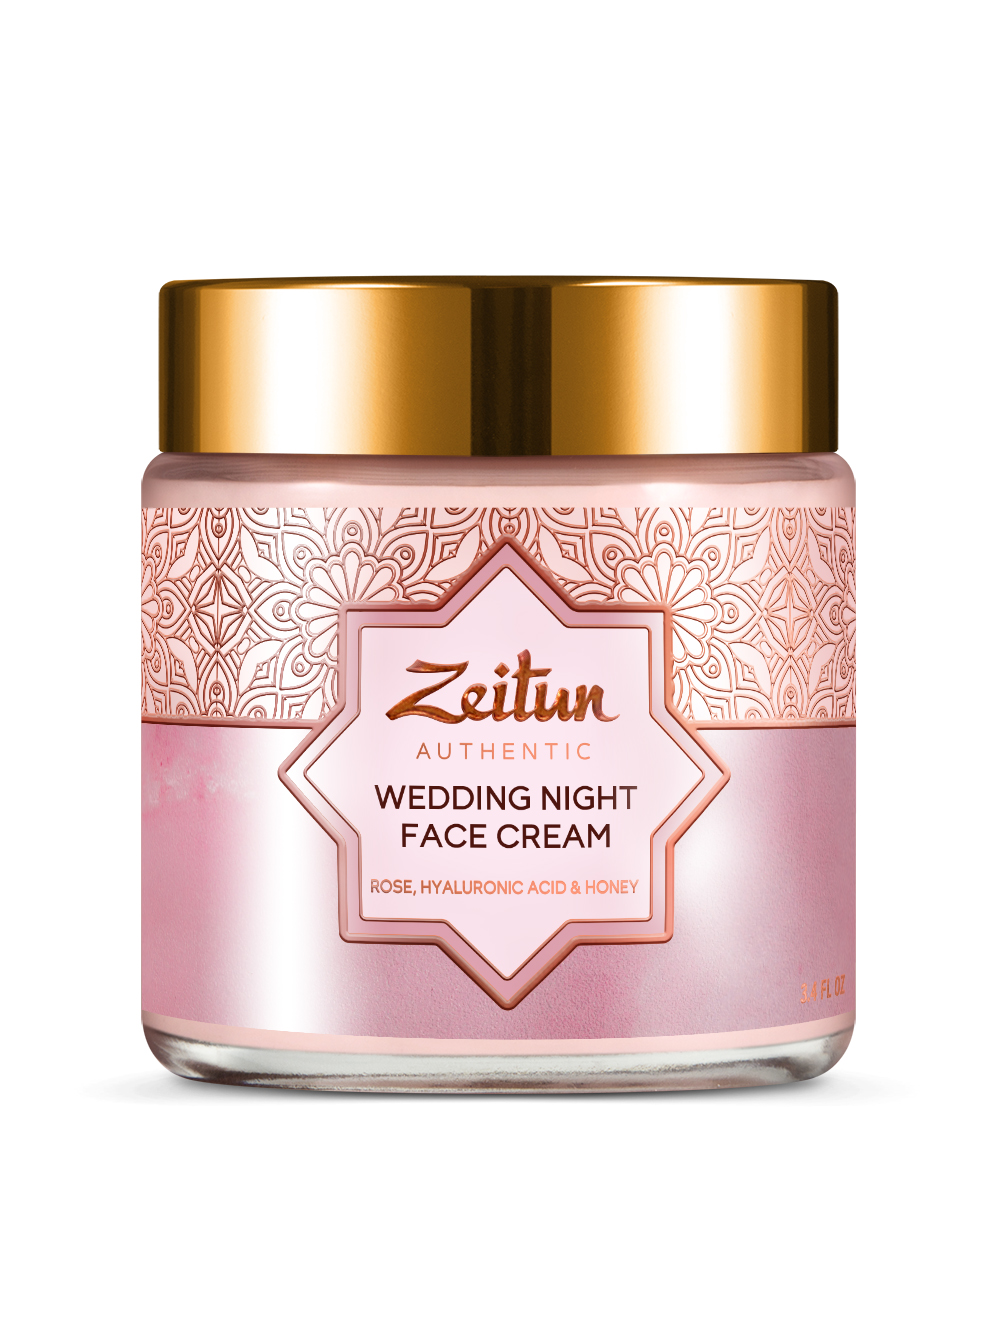 Zeitun Ночной питательный крем Wedding Day, 100 мл (Zeitun, Authentic) крем для лица zeitun wedding day ночной питательный х 2шт